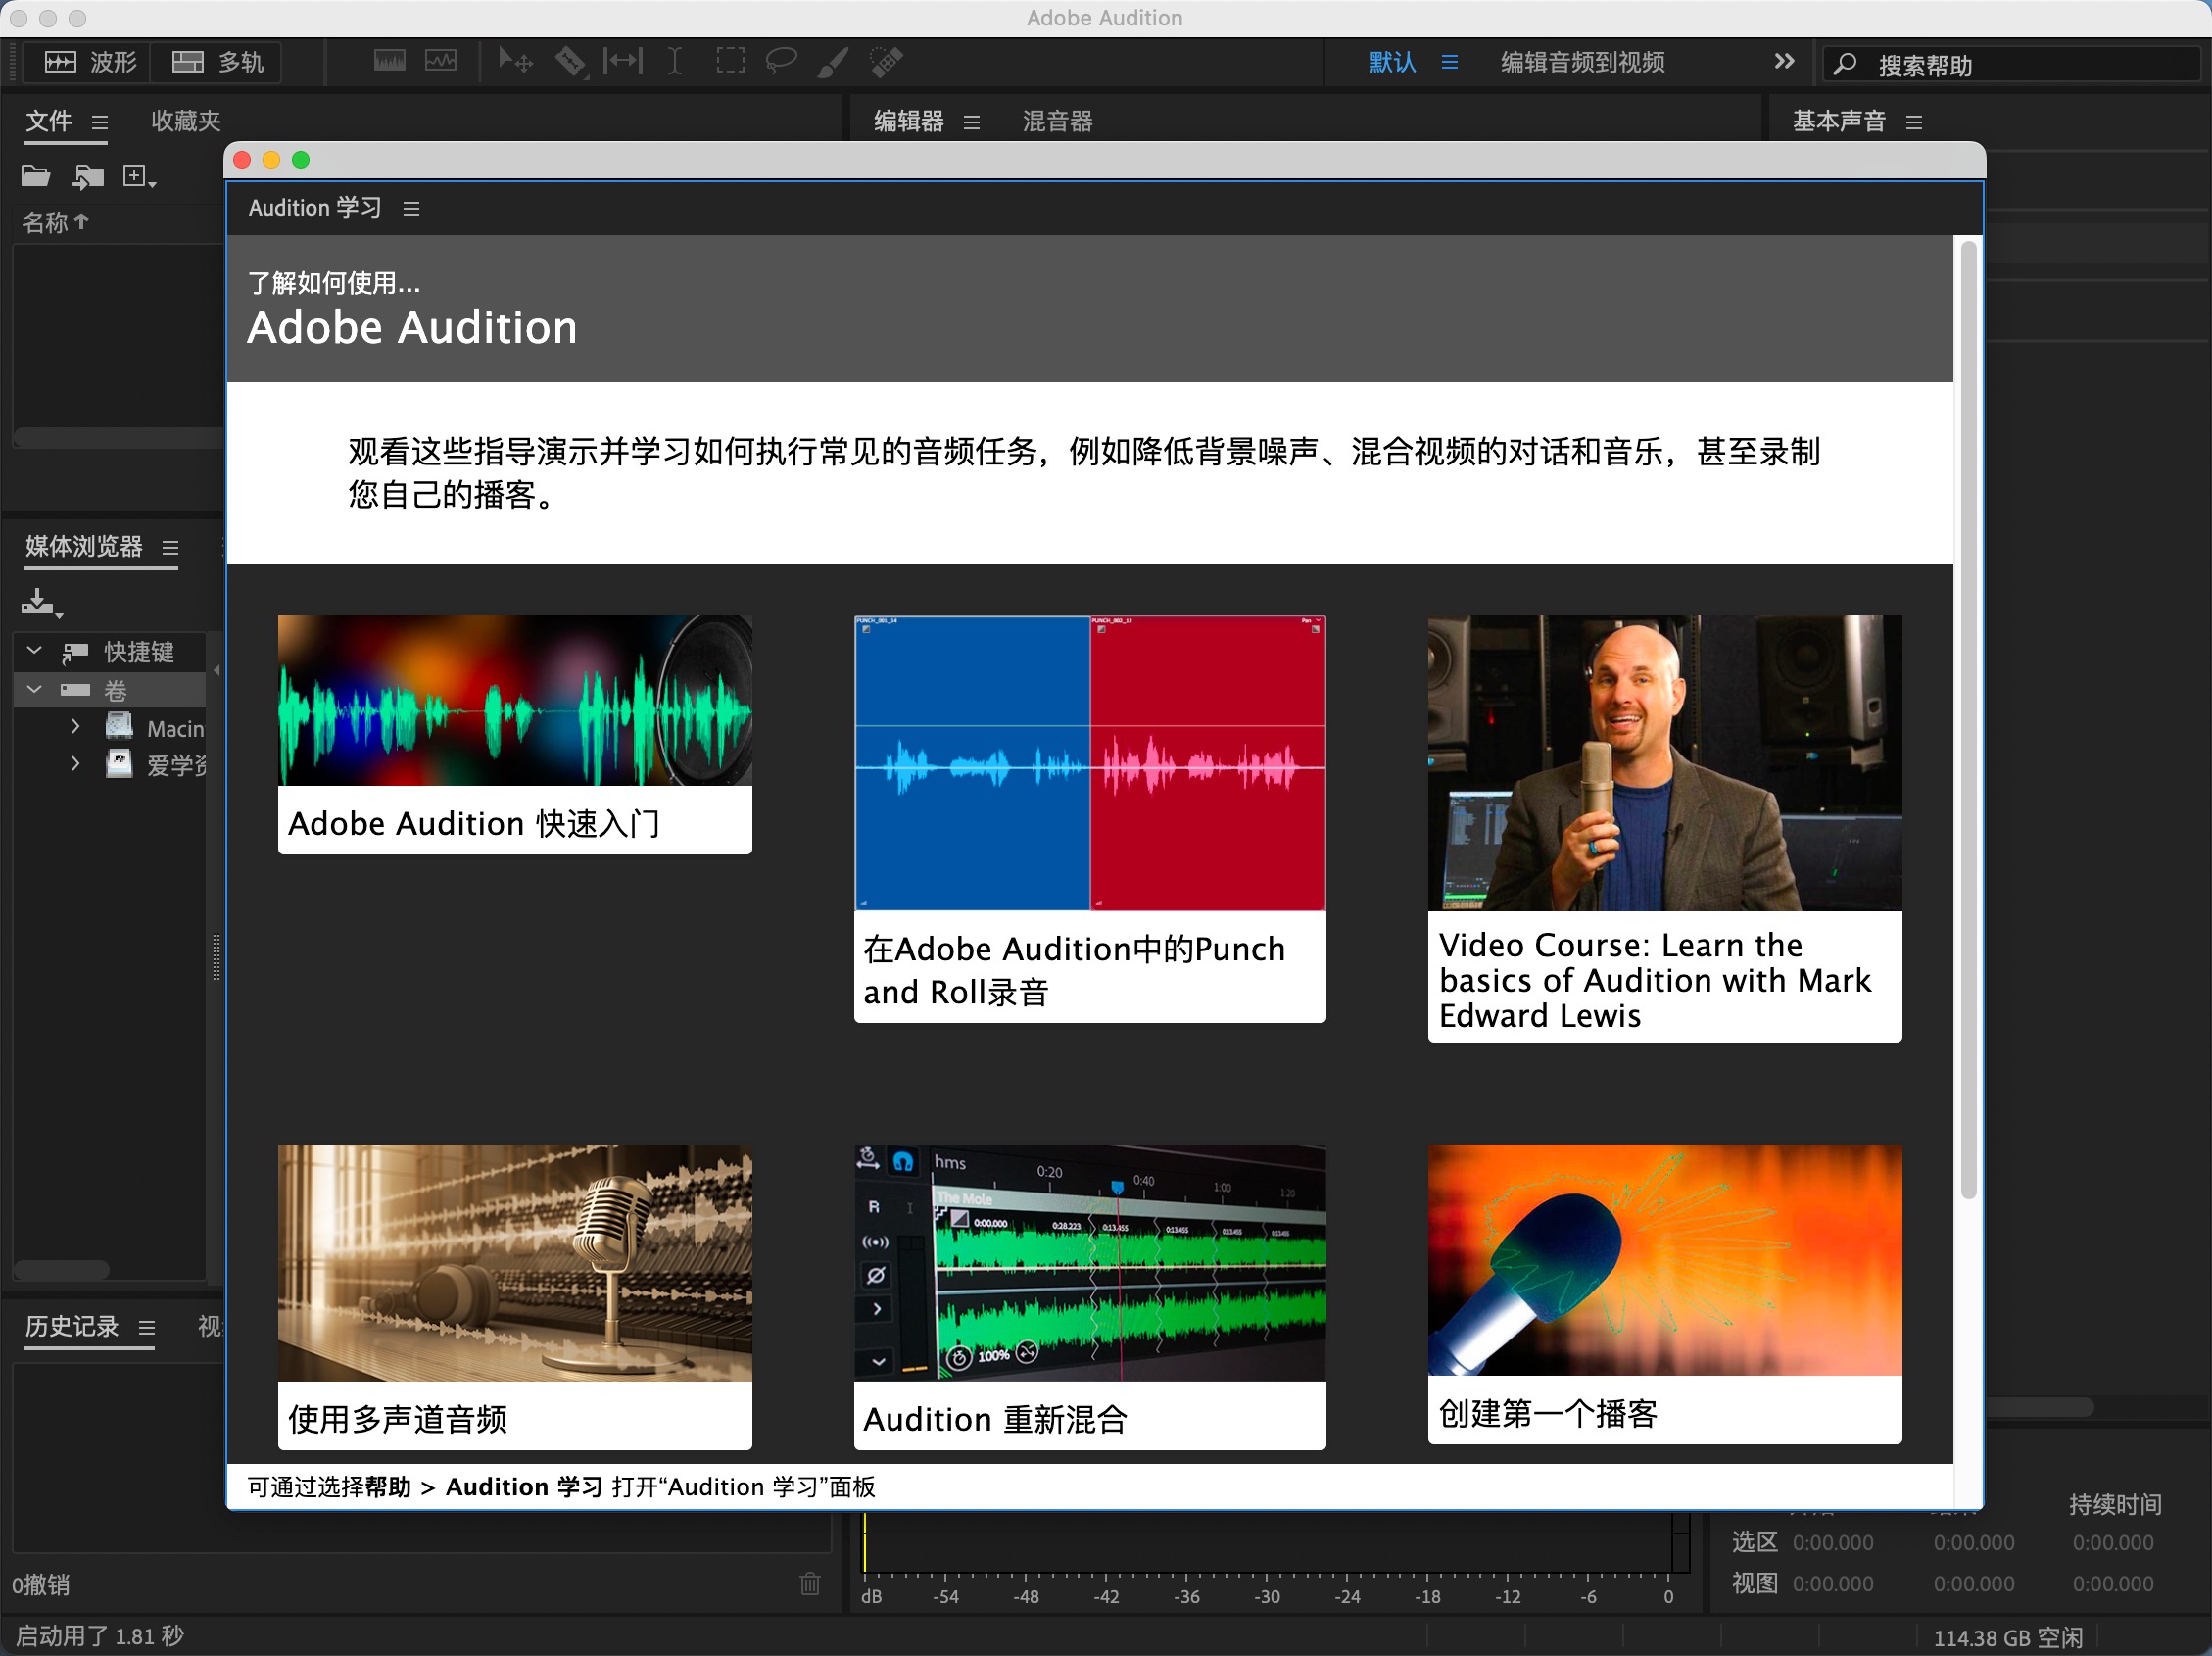 Adobe Audition 2022 for mac(专业音频编辑软件) v22.6中文激活版下载-2